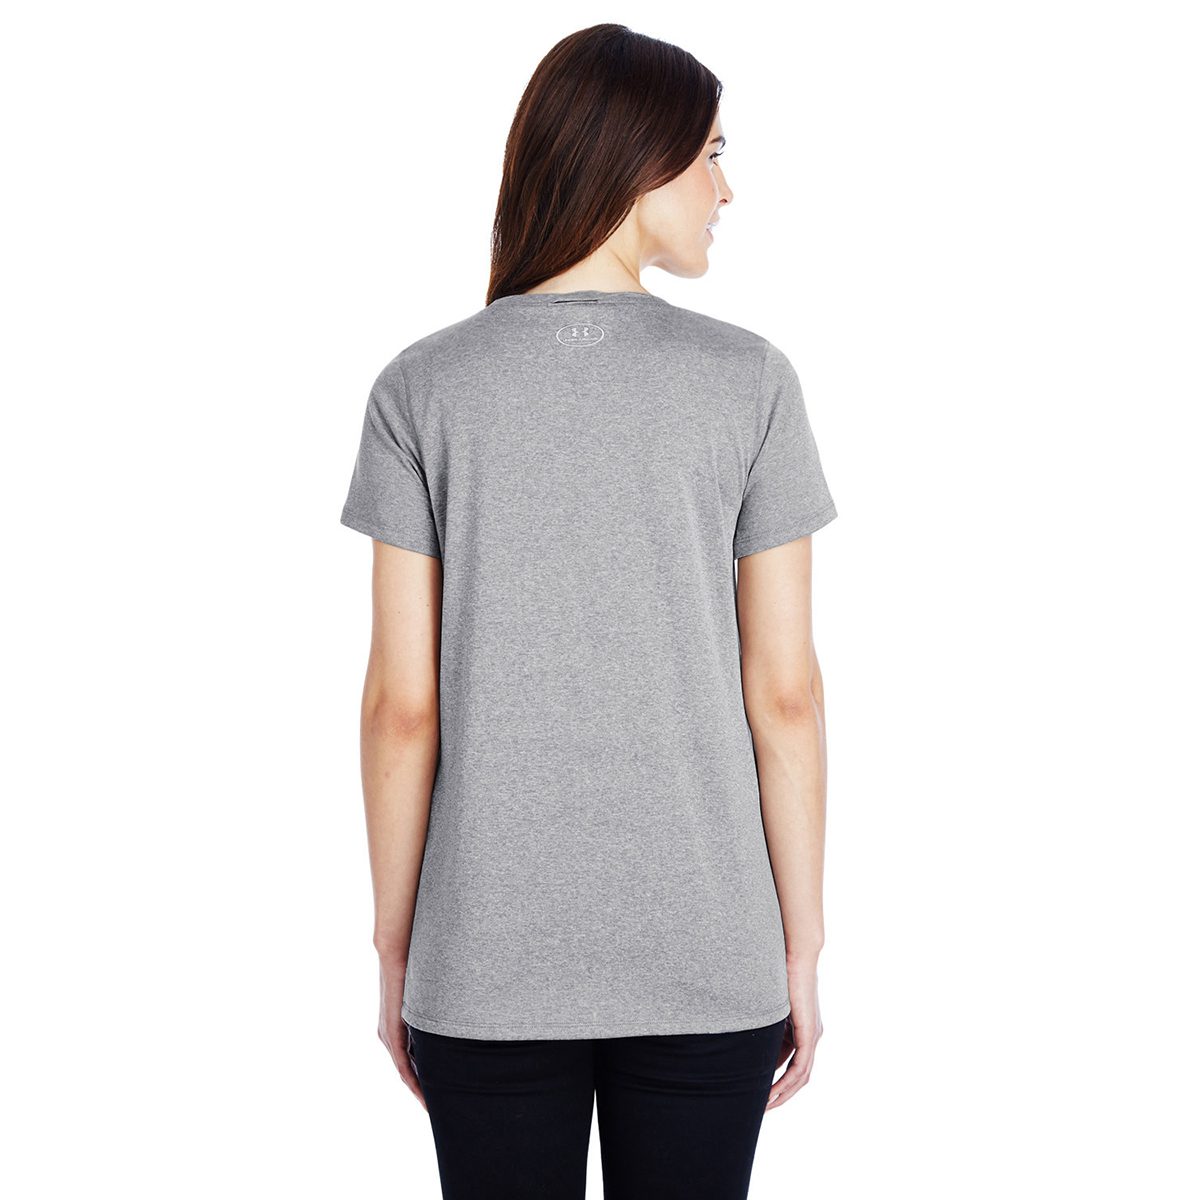 UNDER ARMOUR® Ladies' Locker T-Shirt 2.0 #1305510 Graphite Back